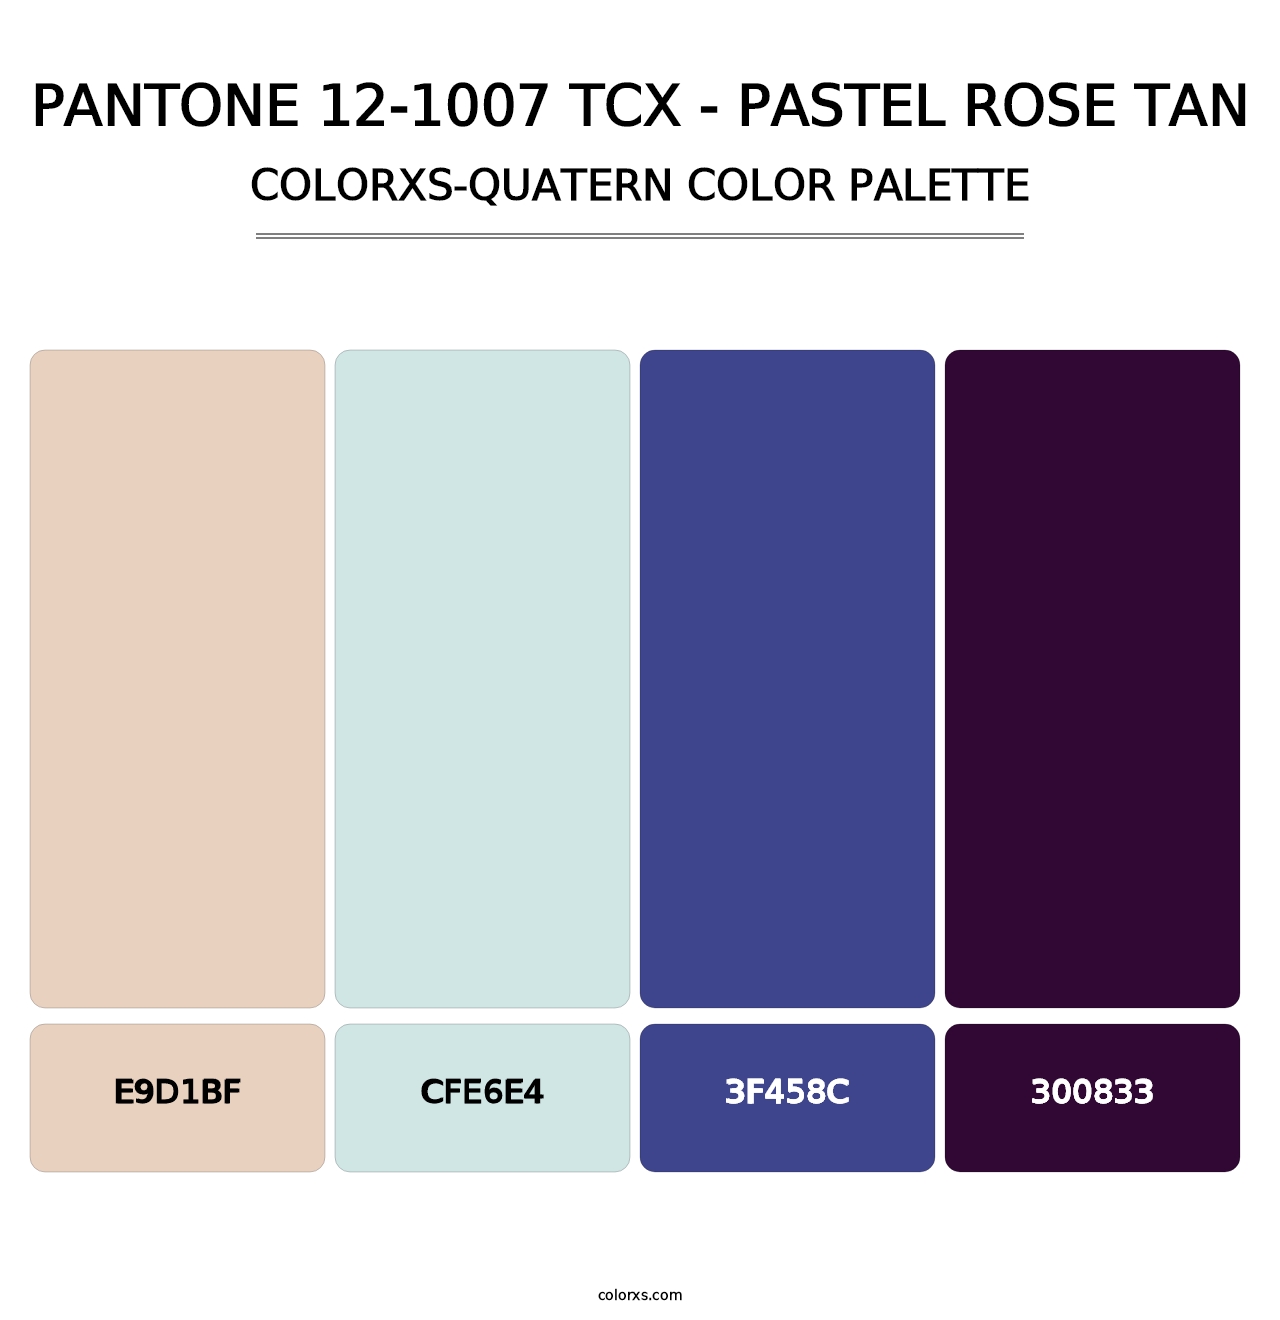 PANTONE 12-1007 TCX - Pastel Rose Tan - Colorxs Quatern Palette